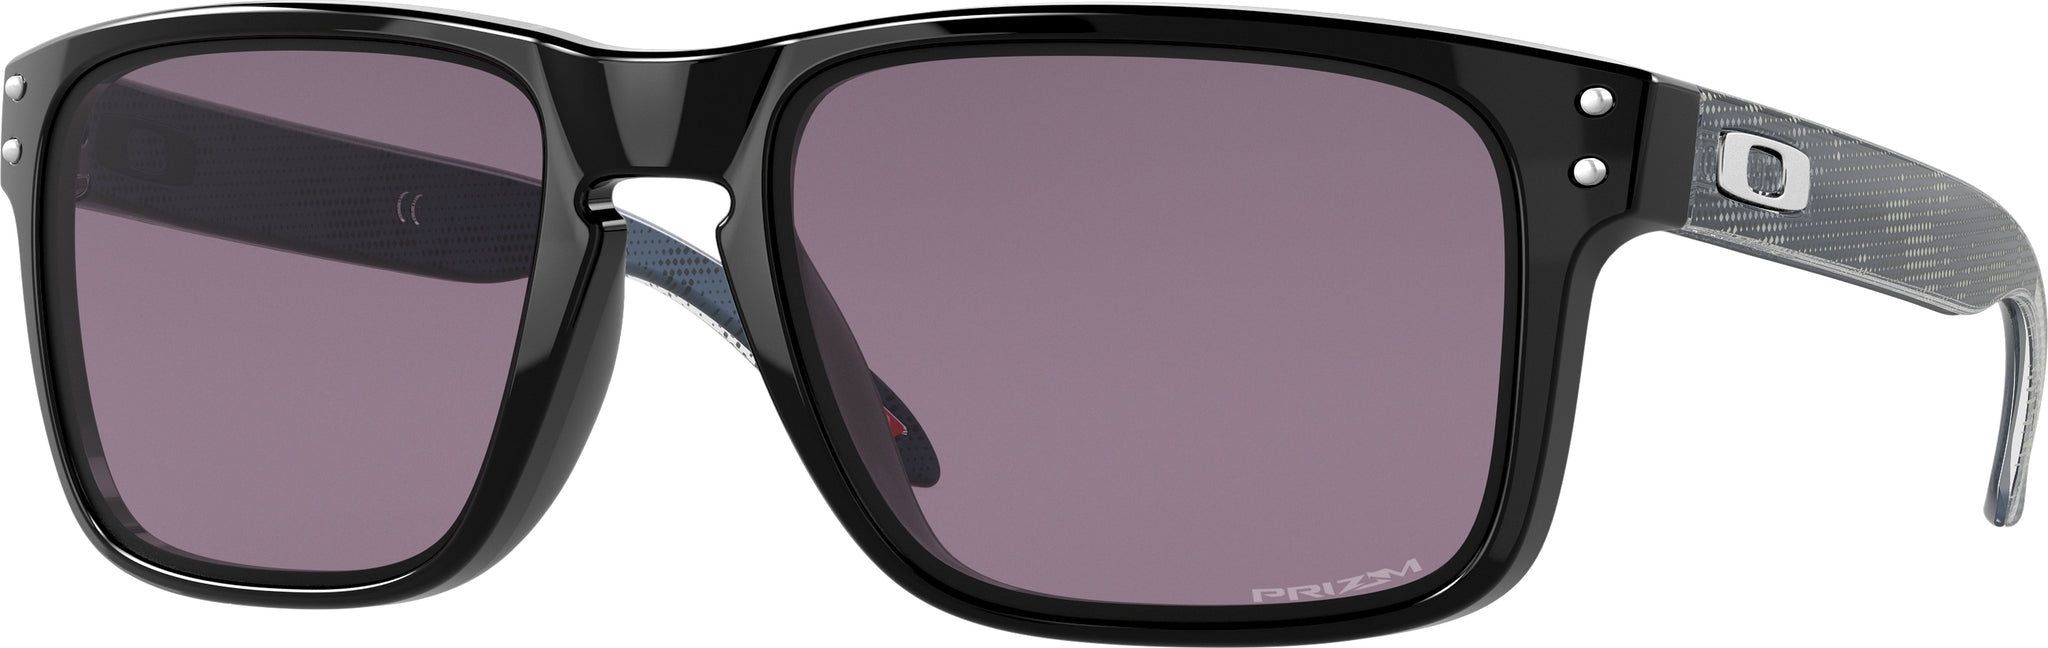 Oakley Holbrook Sunglasses - High Resolution - Prizm Grey Lens - Men's |  Altitude Sports